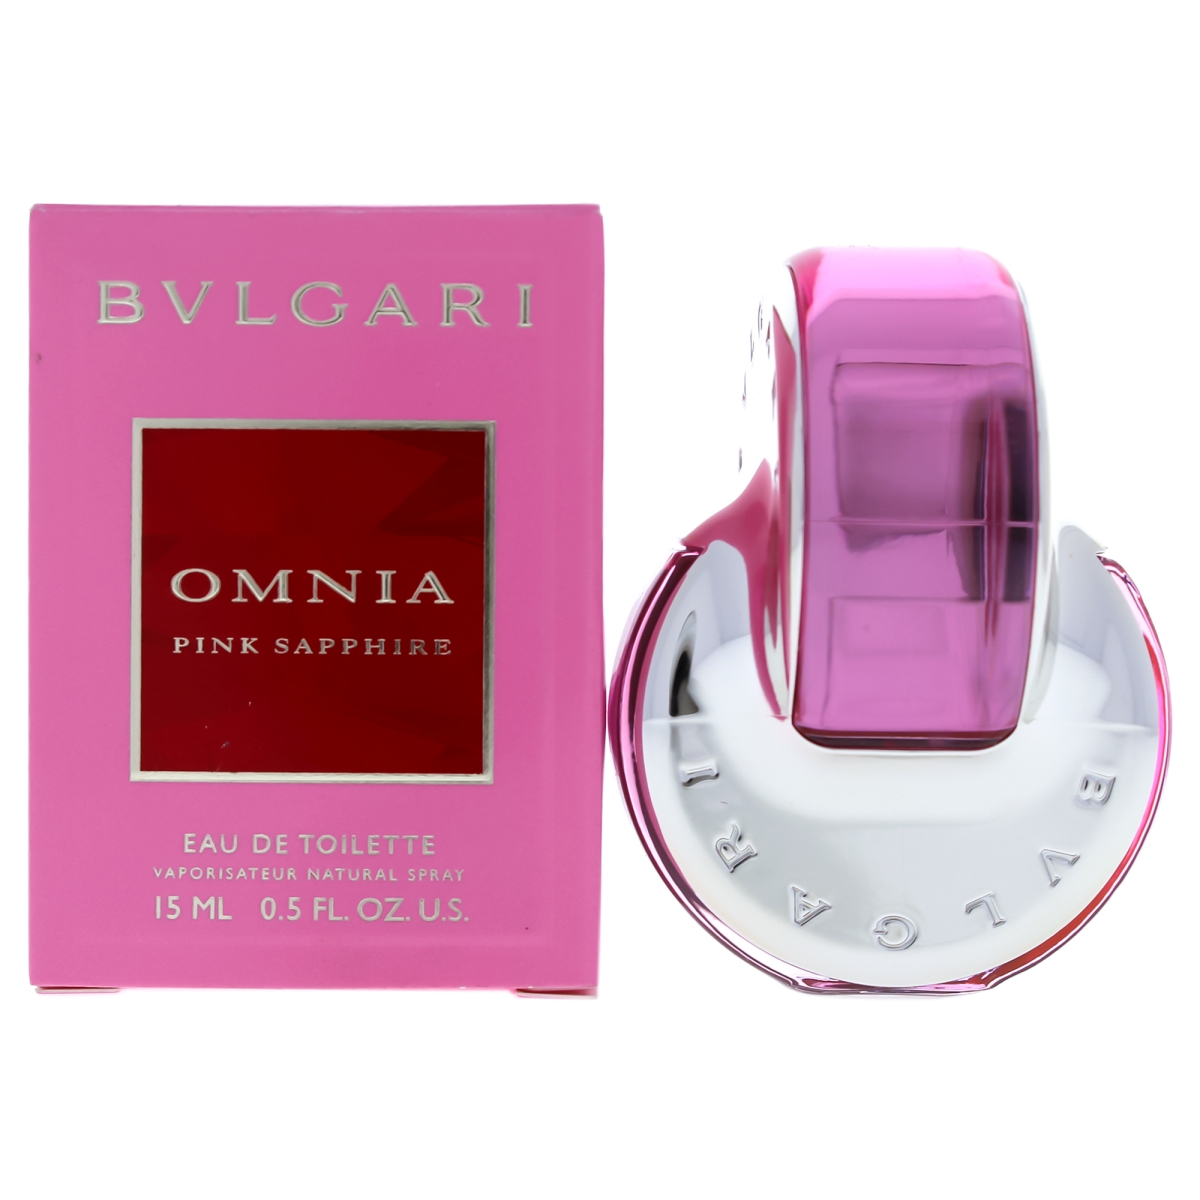 I0089235 Omnia Pink Sapphire Edt Spray For Women - 0.5 Oz